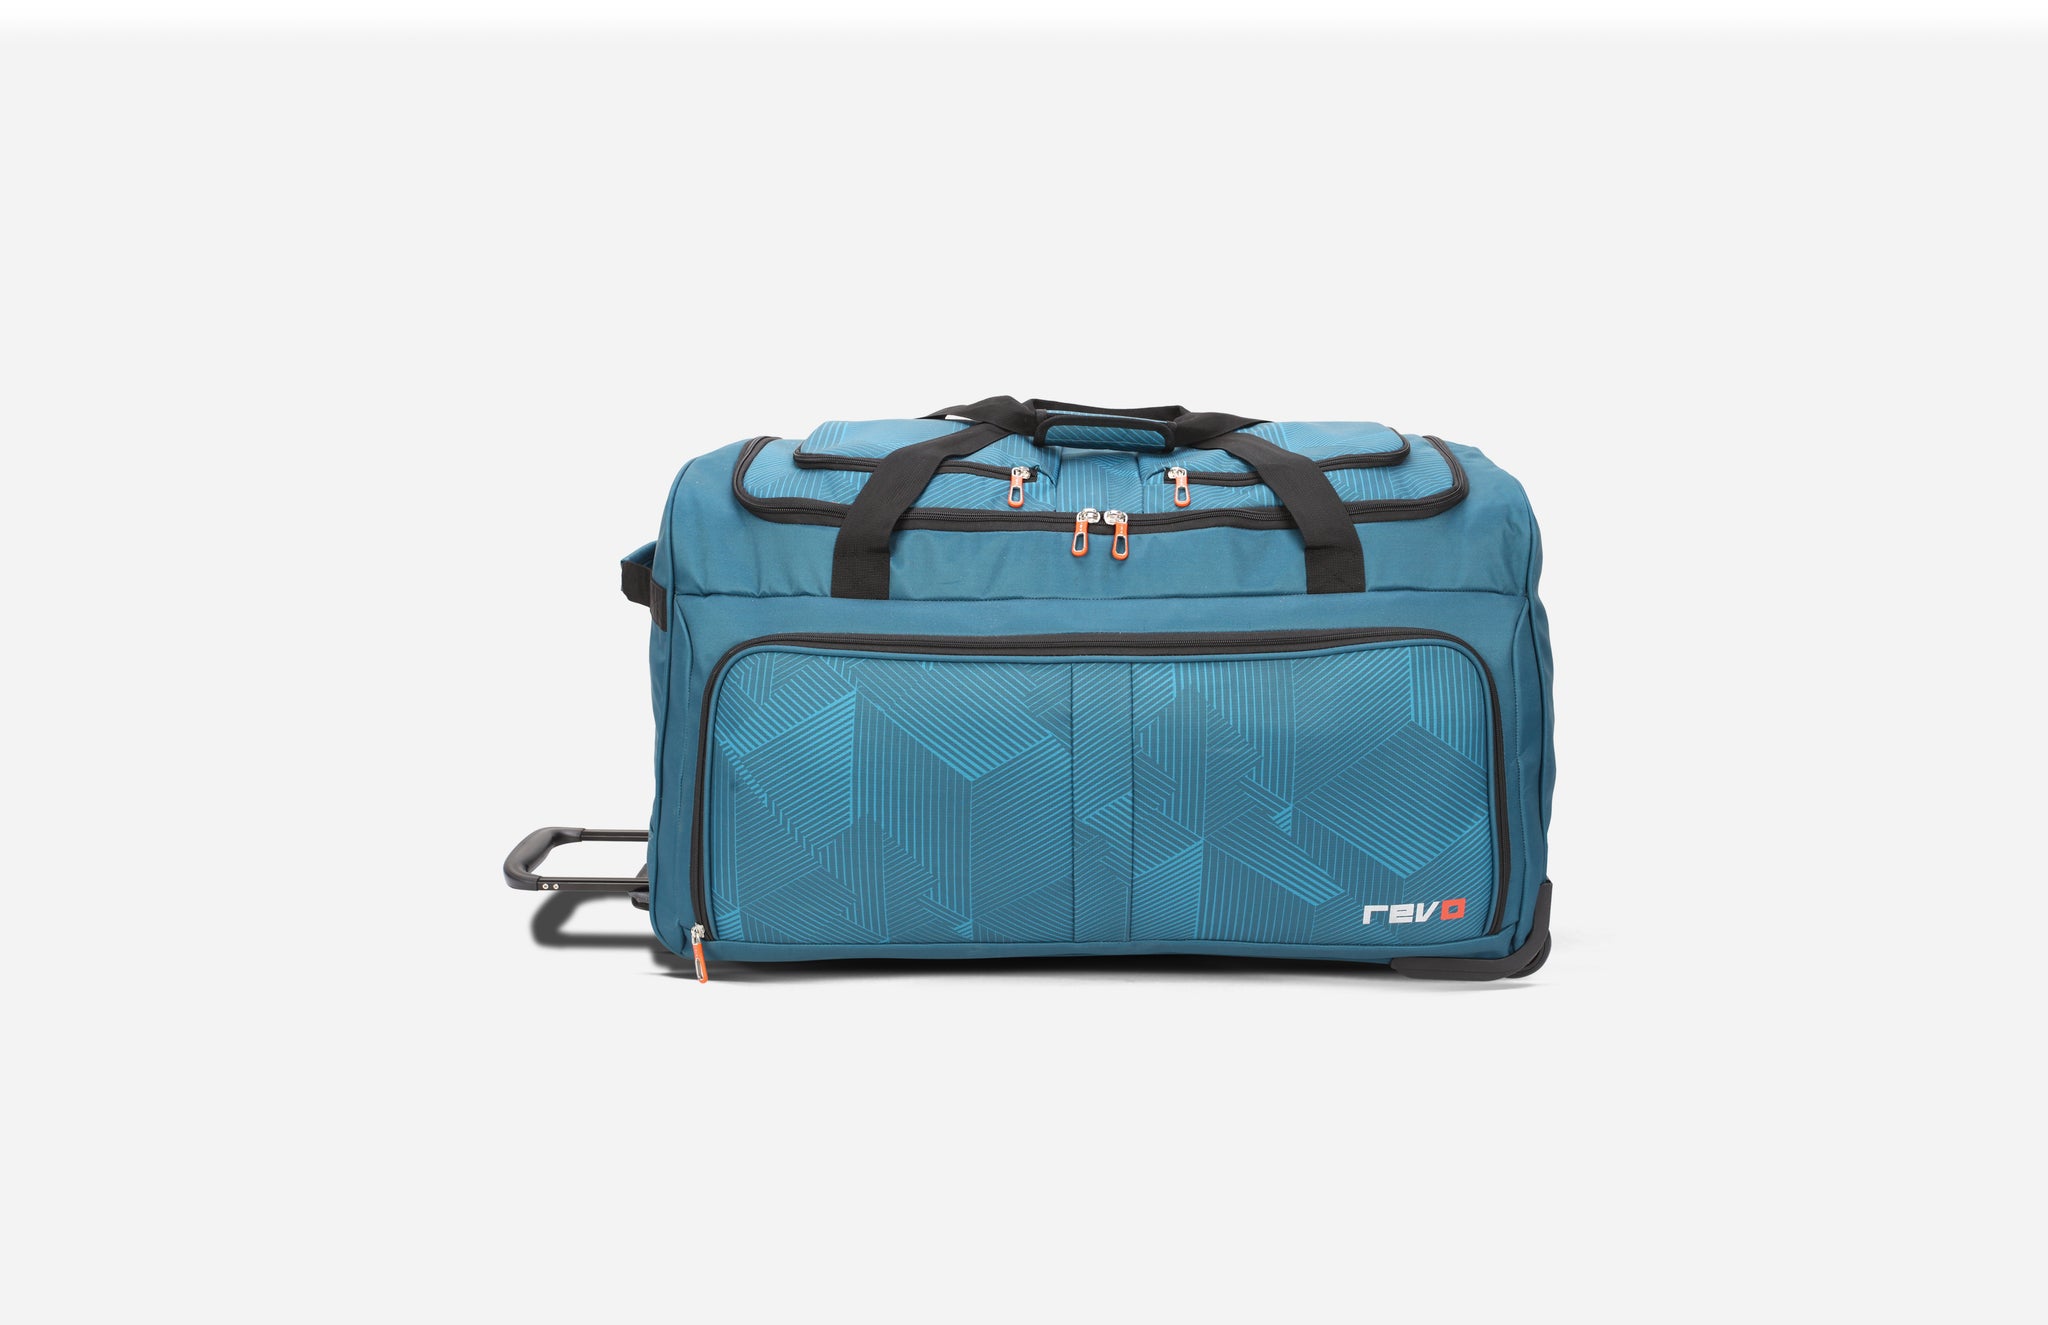 REVO Scratch 30' Wheel Duffle Bag